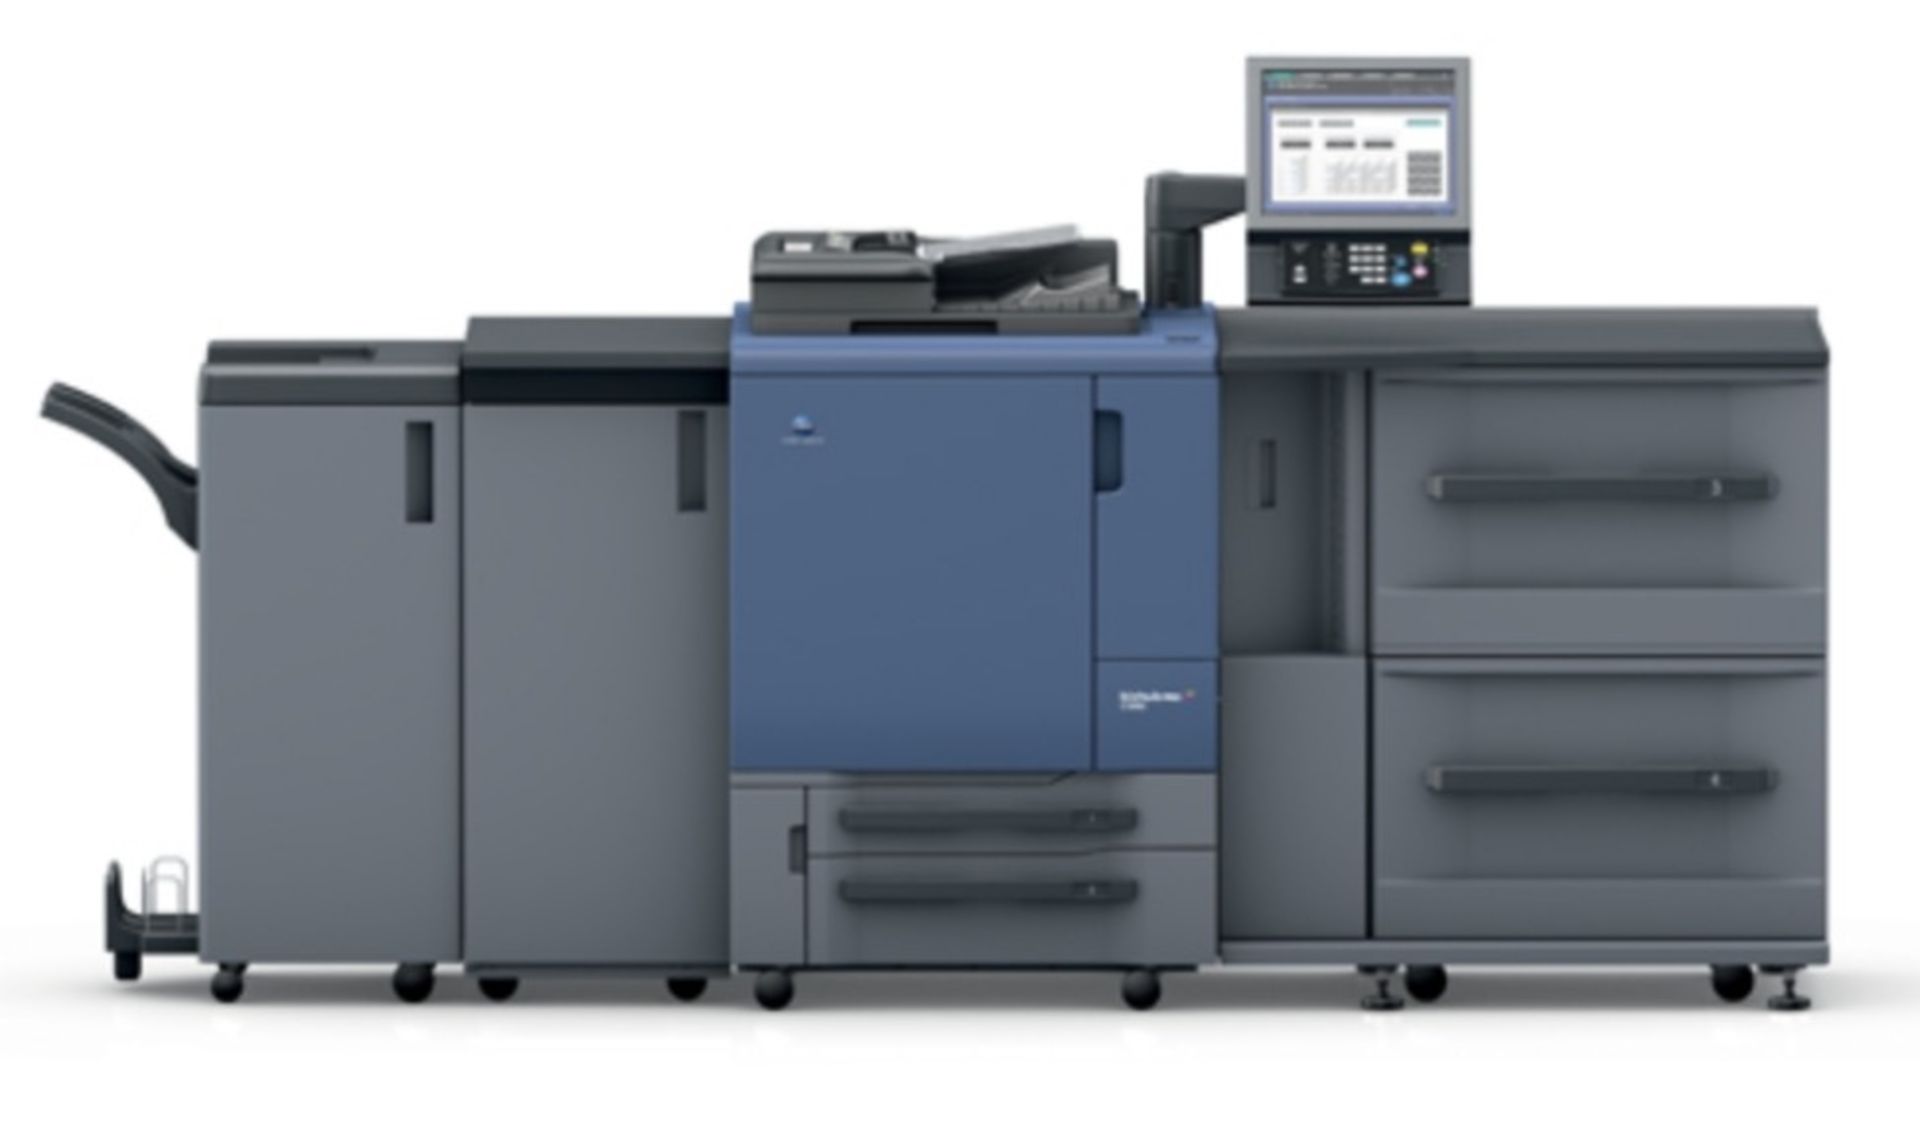 Konica Minolta C1060 Commercial Digital Printing Press - Image 4 of 4